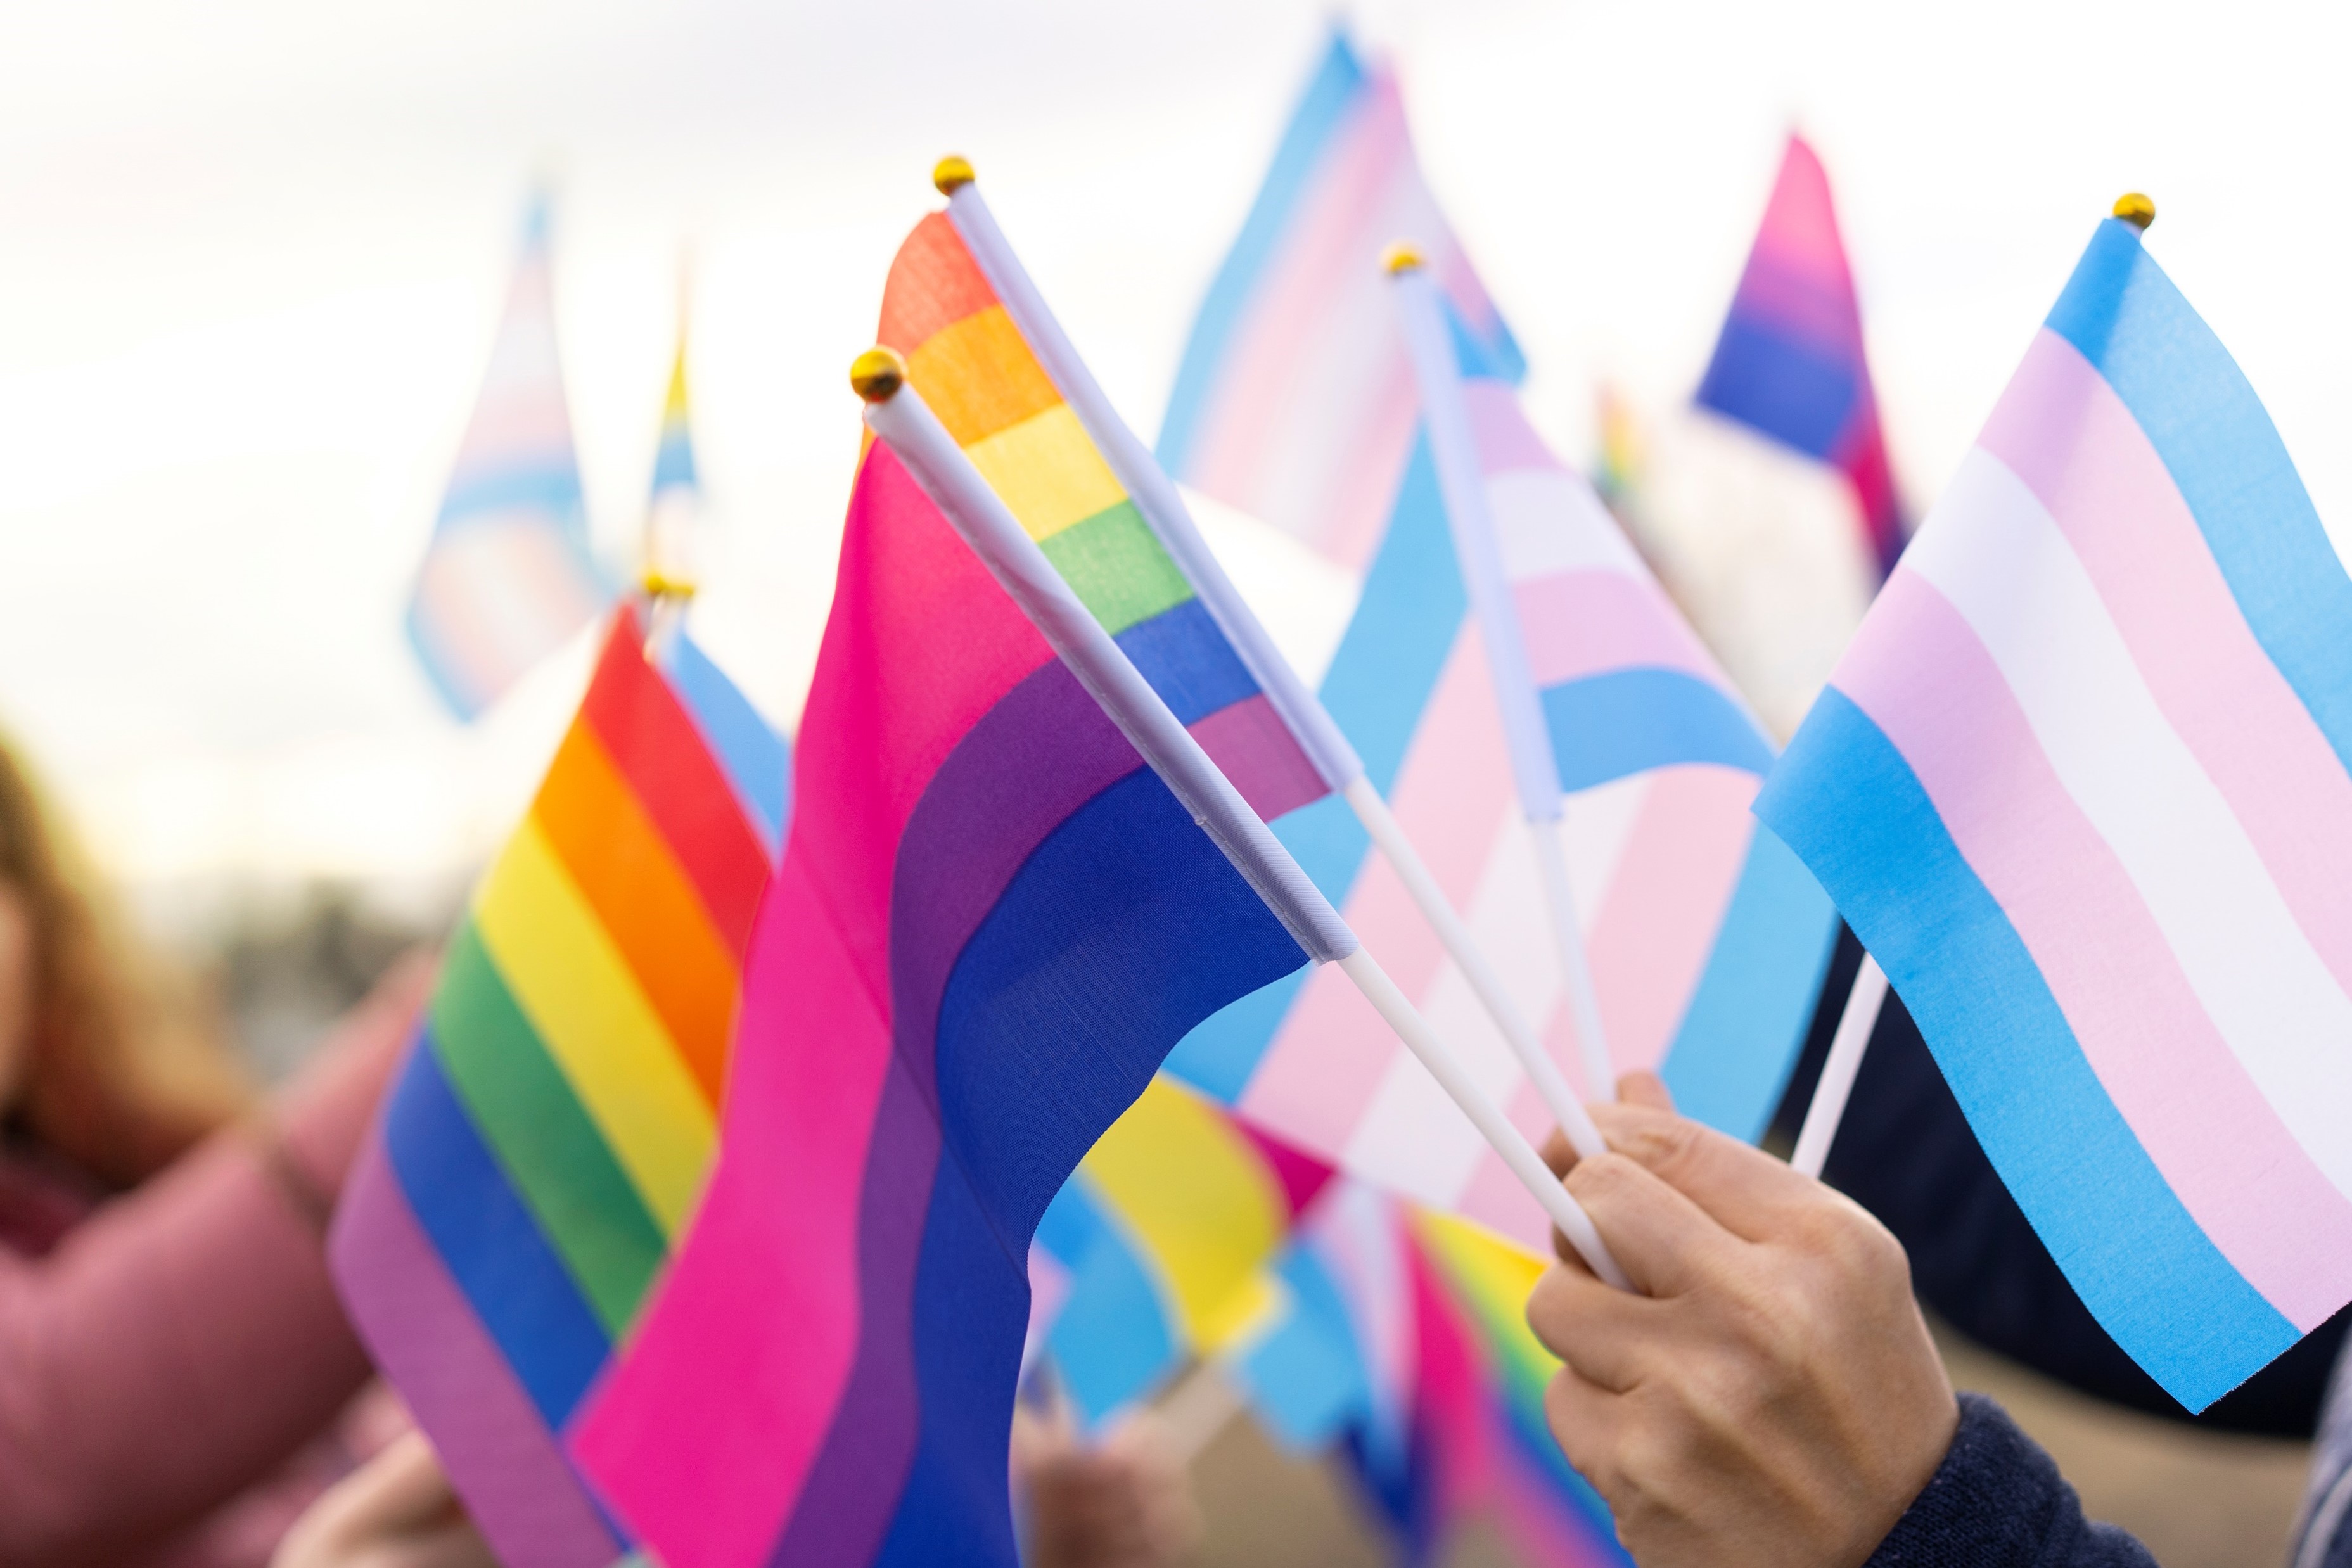 Rainbow, bisexual, and transgender pride flags